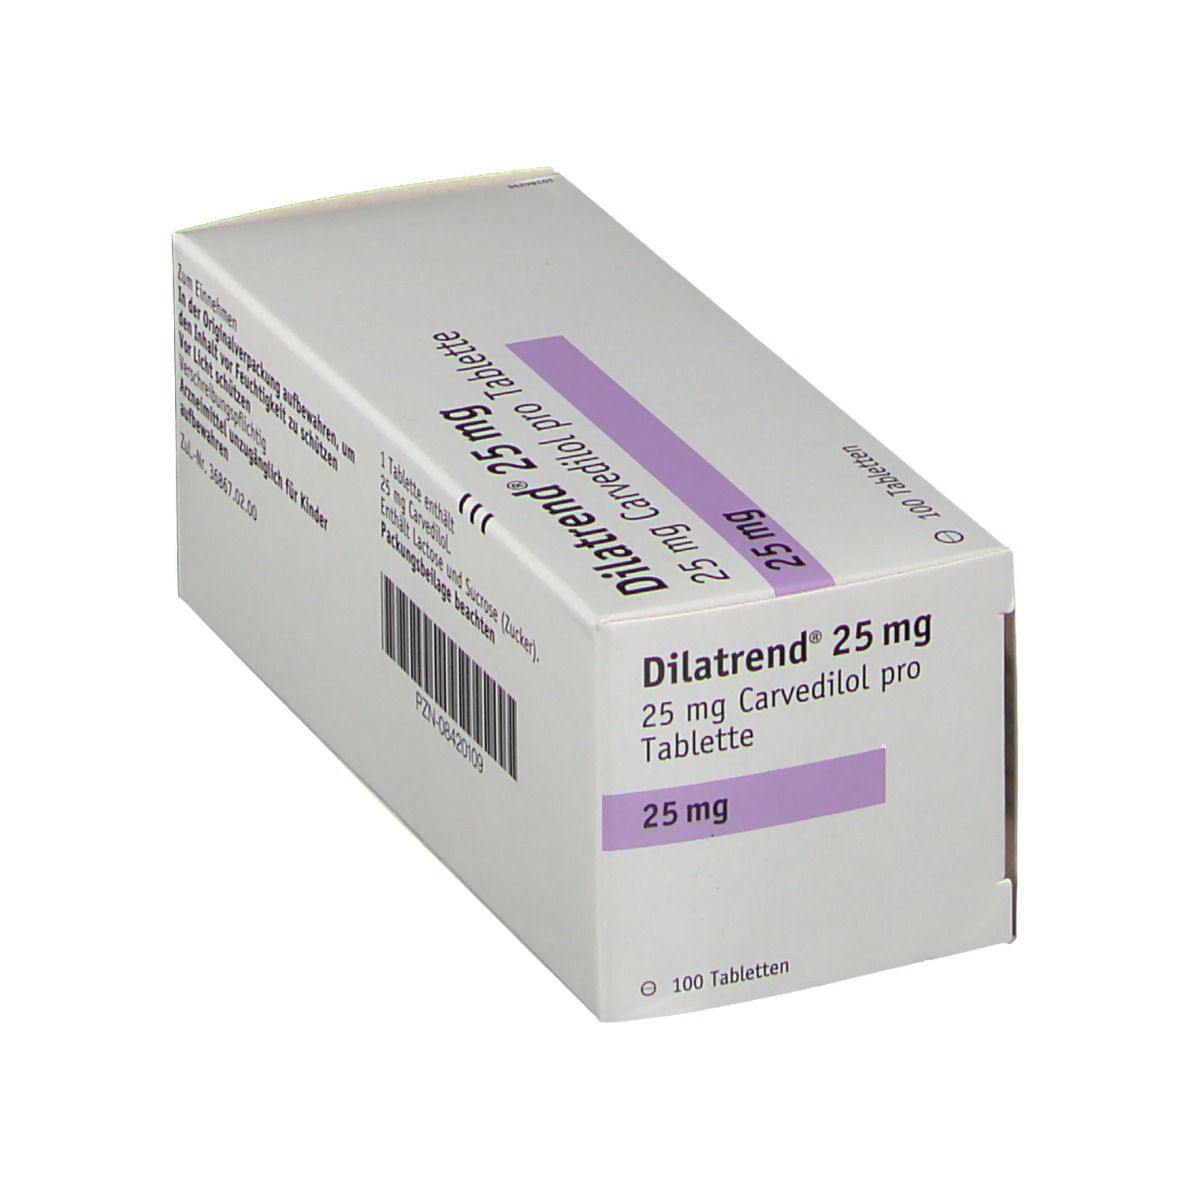 Dilatrend® 25 mg